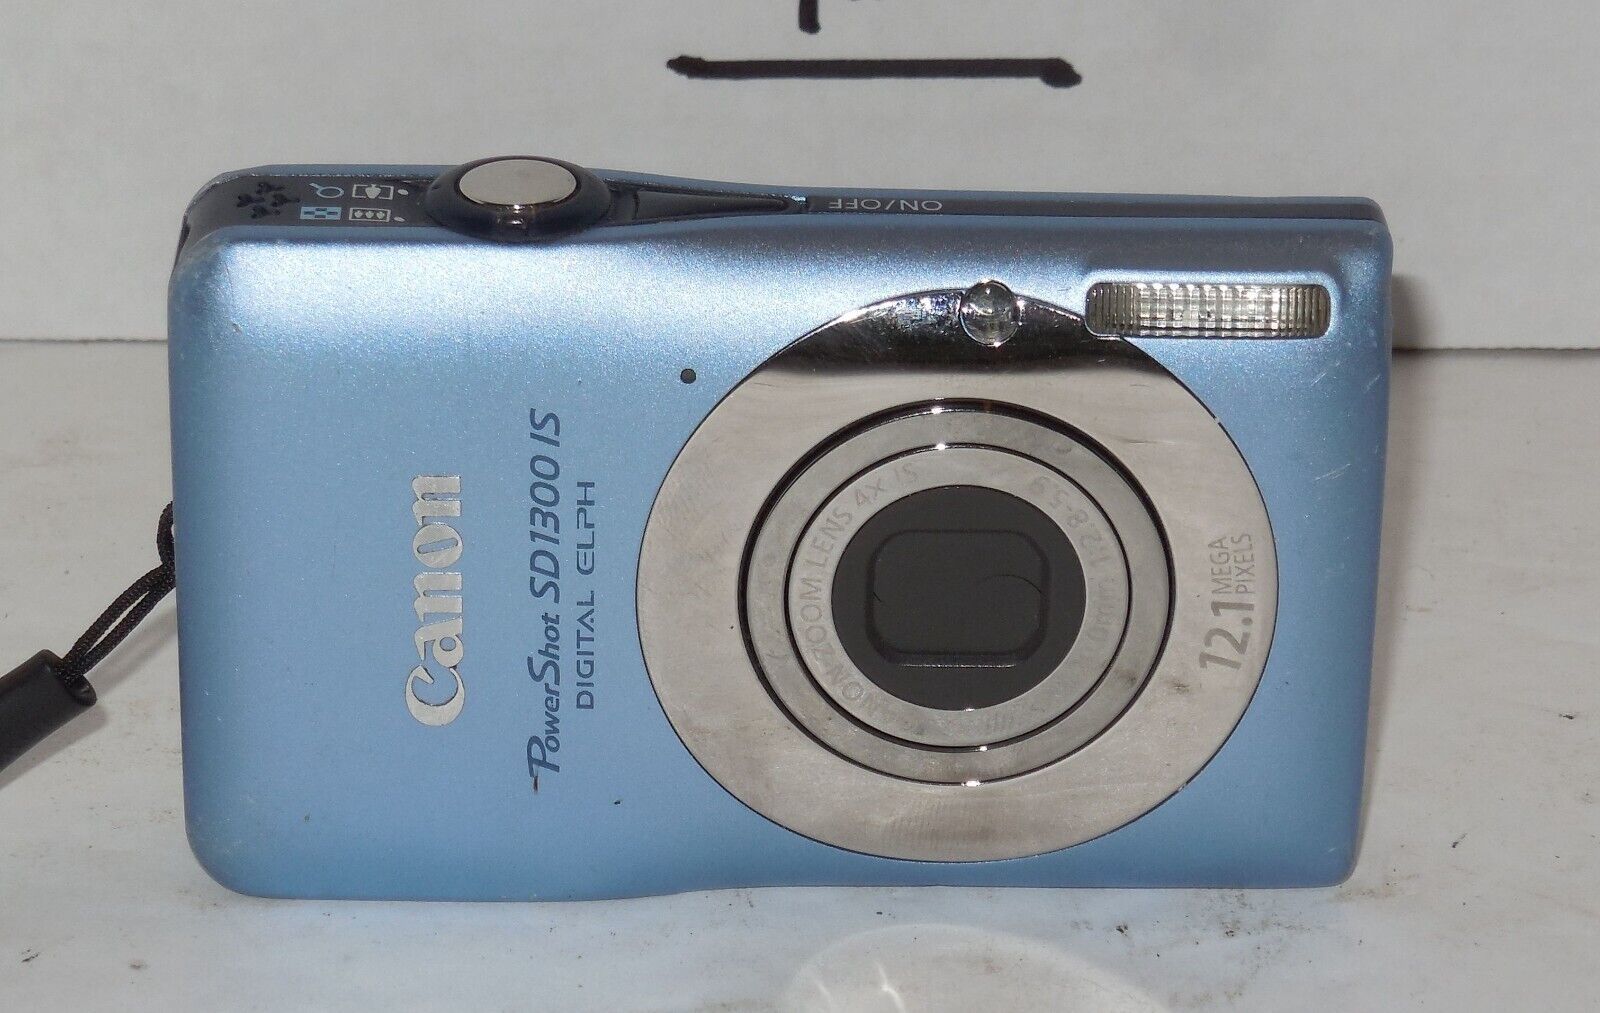 Canon PowerShot Digital ELPH SD1300 IS 12.1 MP Digital Camera -Blue Tested Work - $246.26